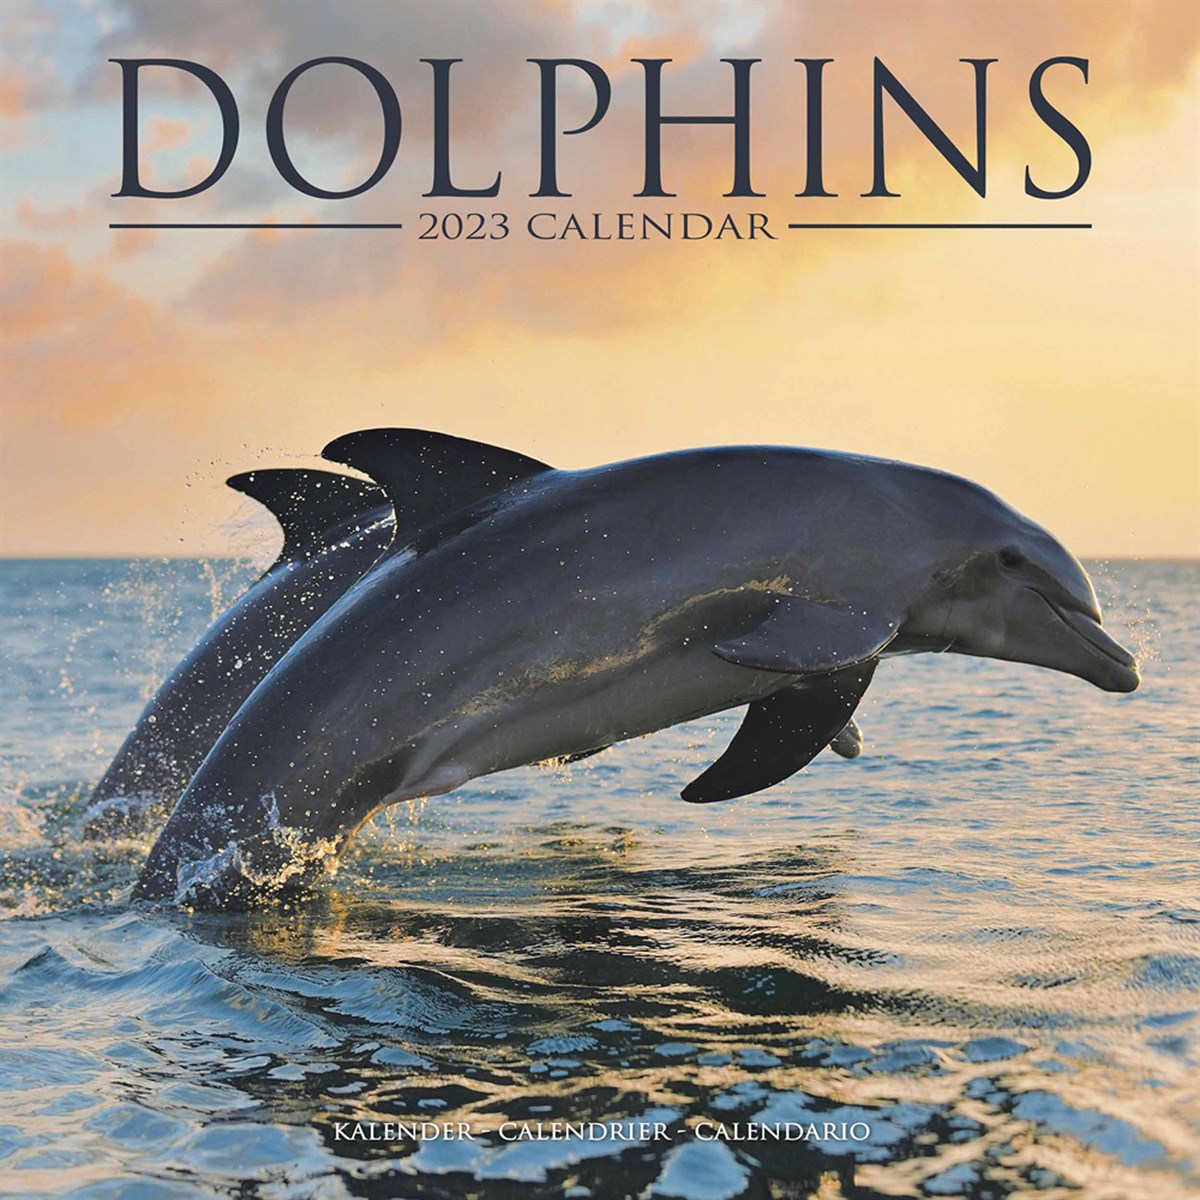 Dolphins 2023 Calendars